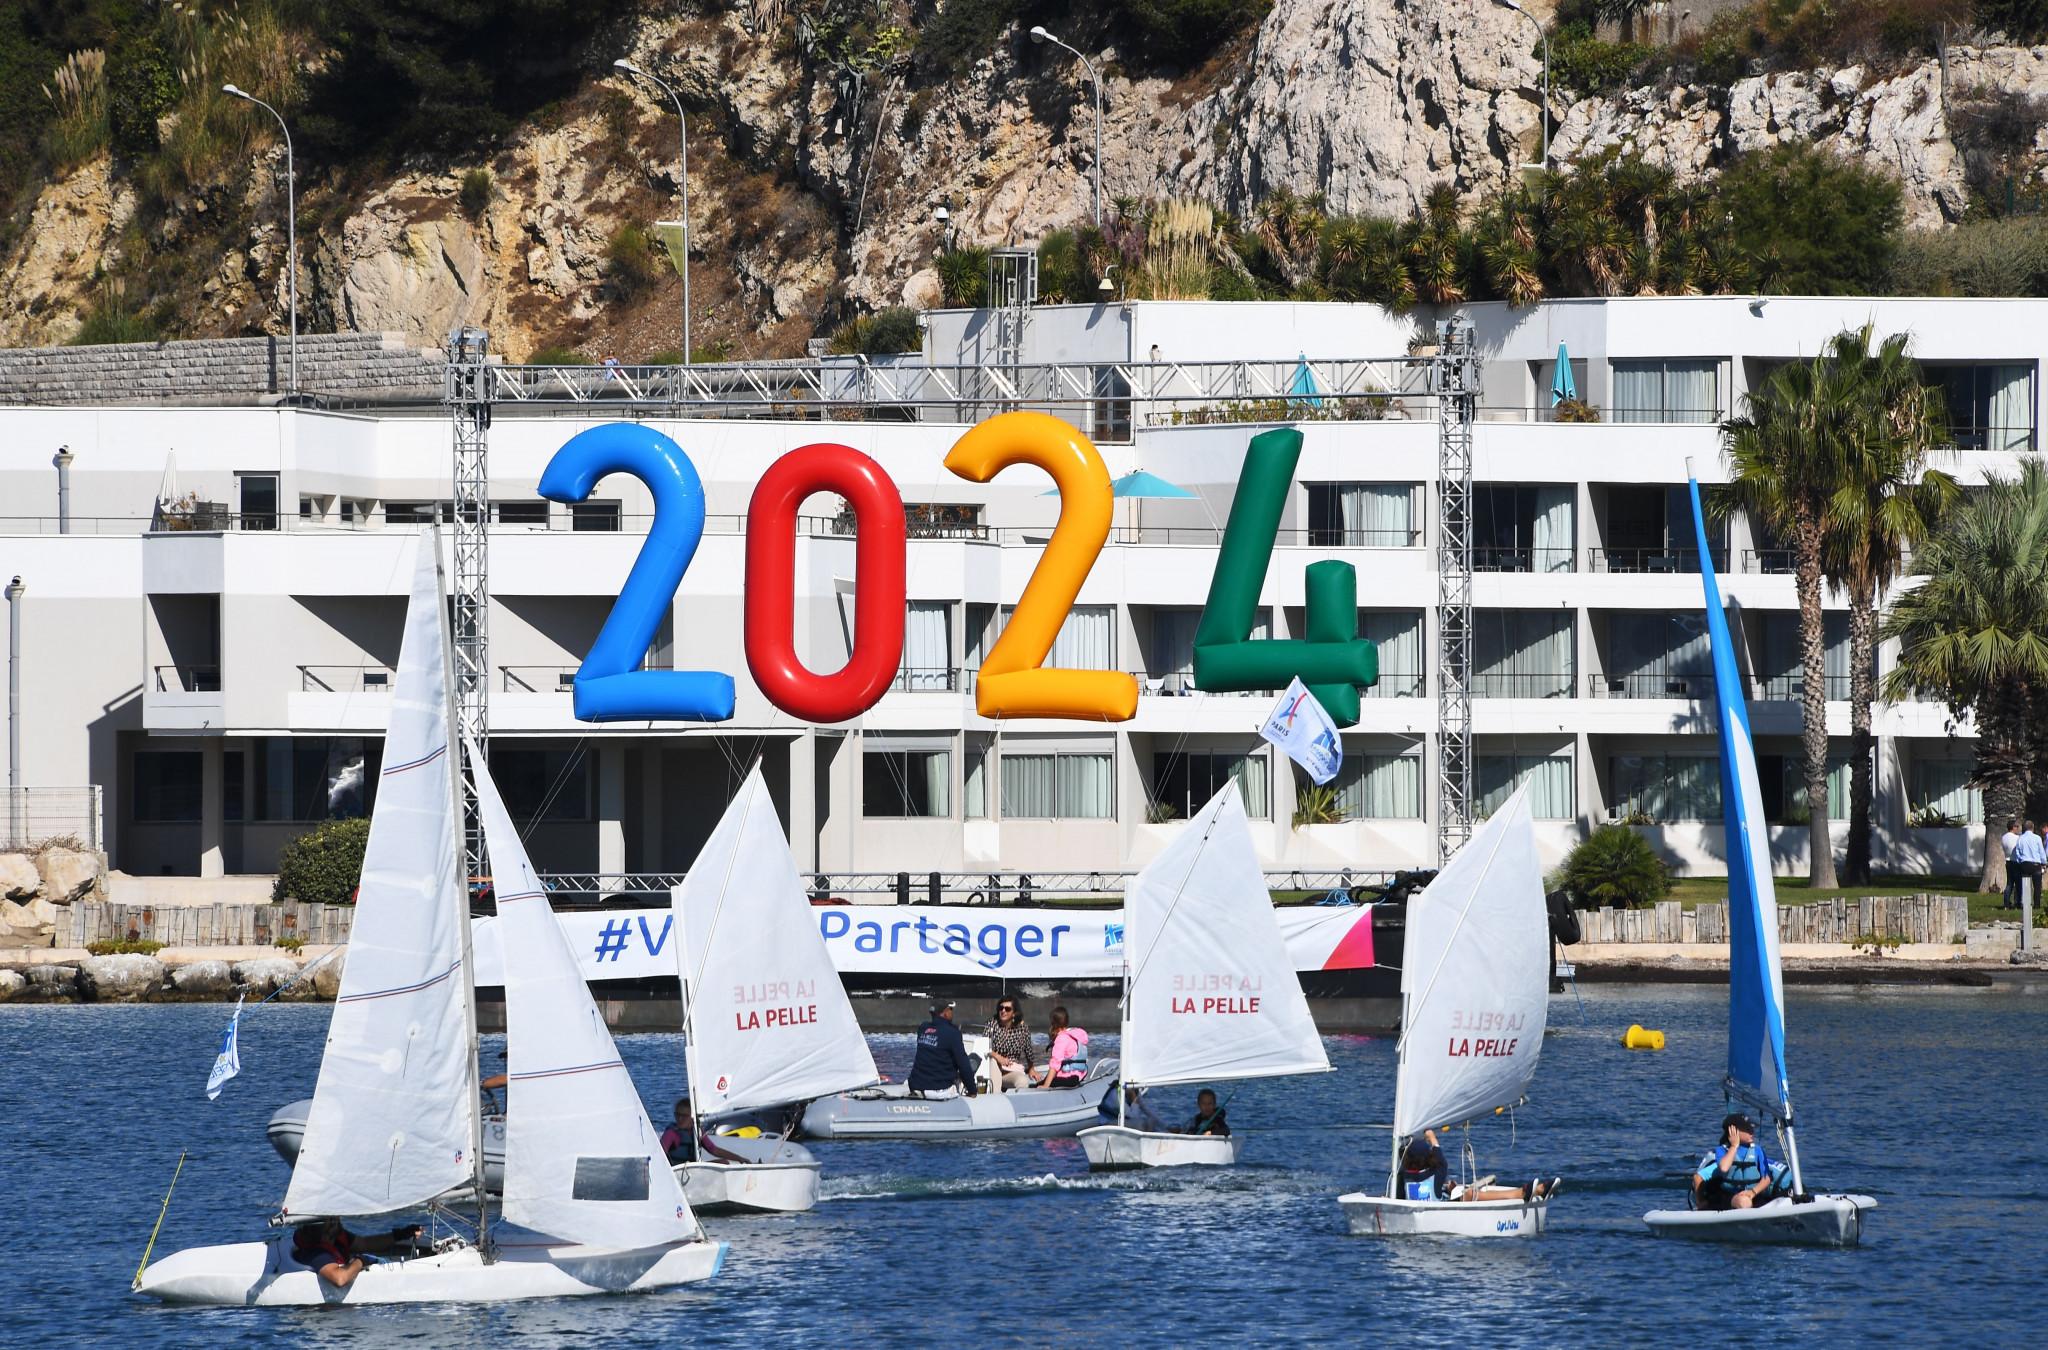 Paris 2024 President Estanguet says funding agreement in place for Marseille sailing venue